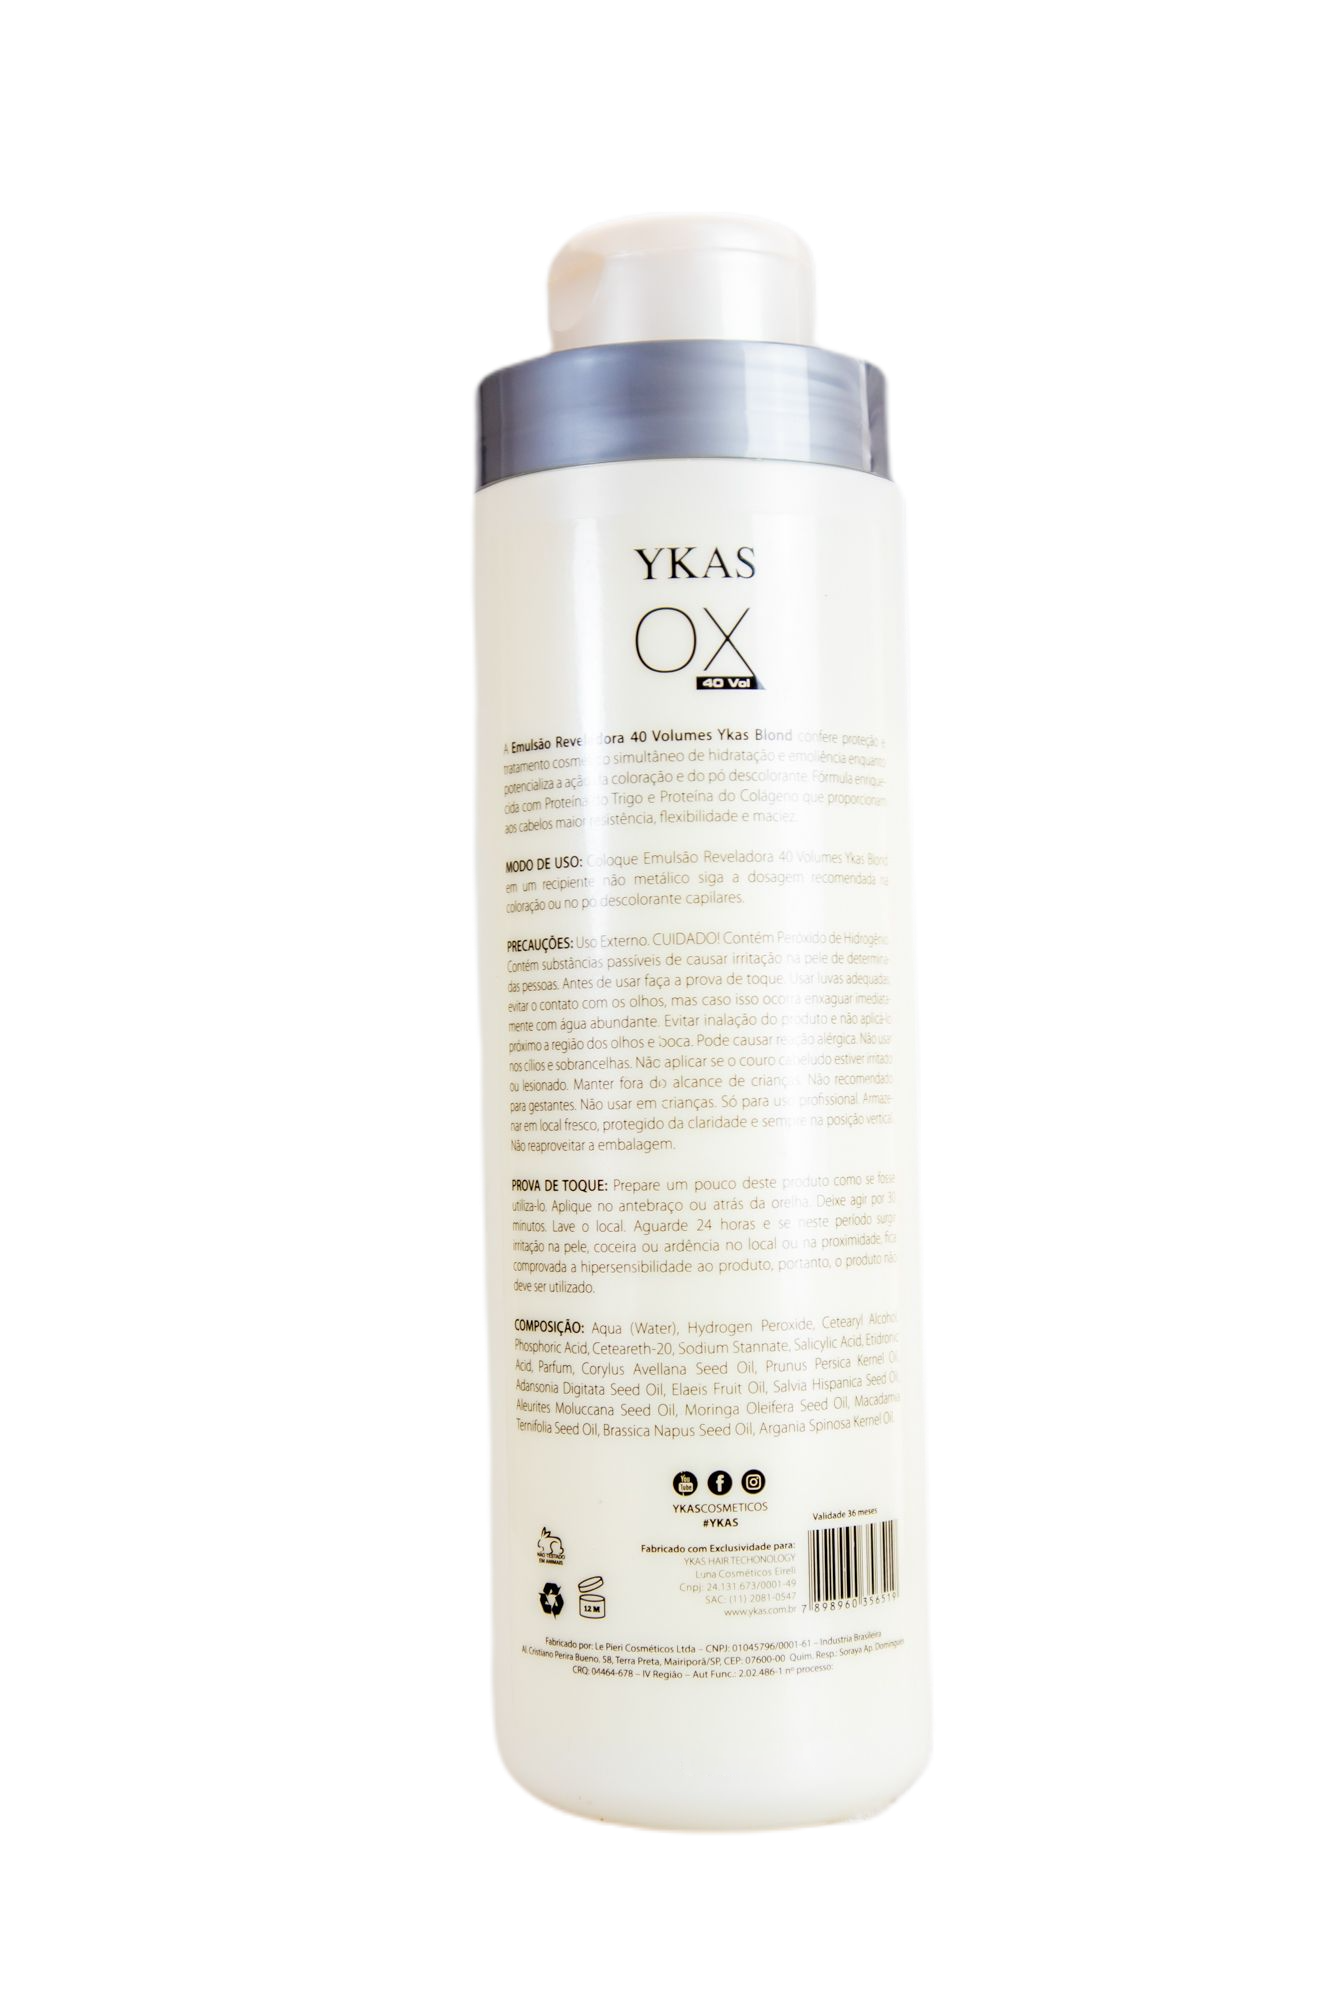 Ykas Brazilian Hair Treatment Professional Blond Oxidizing Emulsion Hair Treatment OX 40 900ml 14% - Ykas